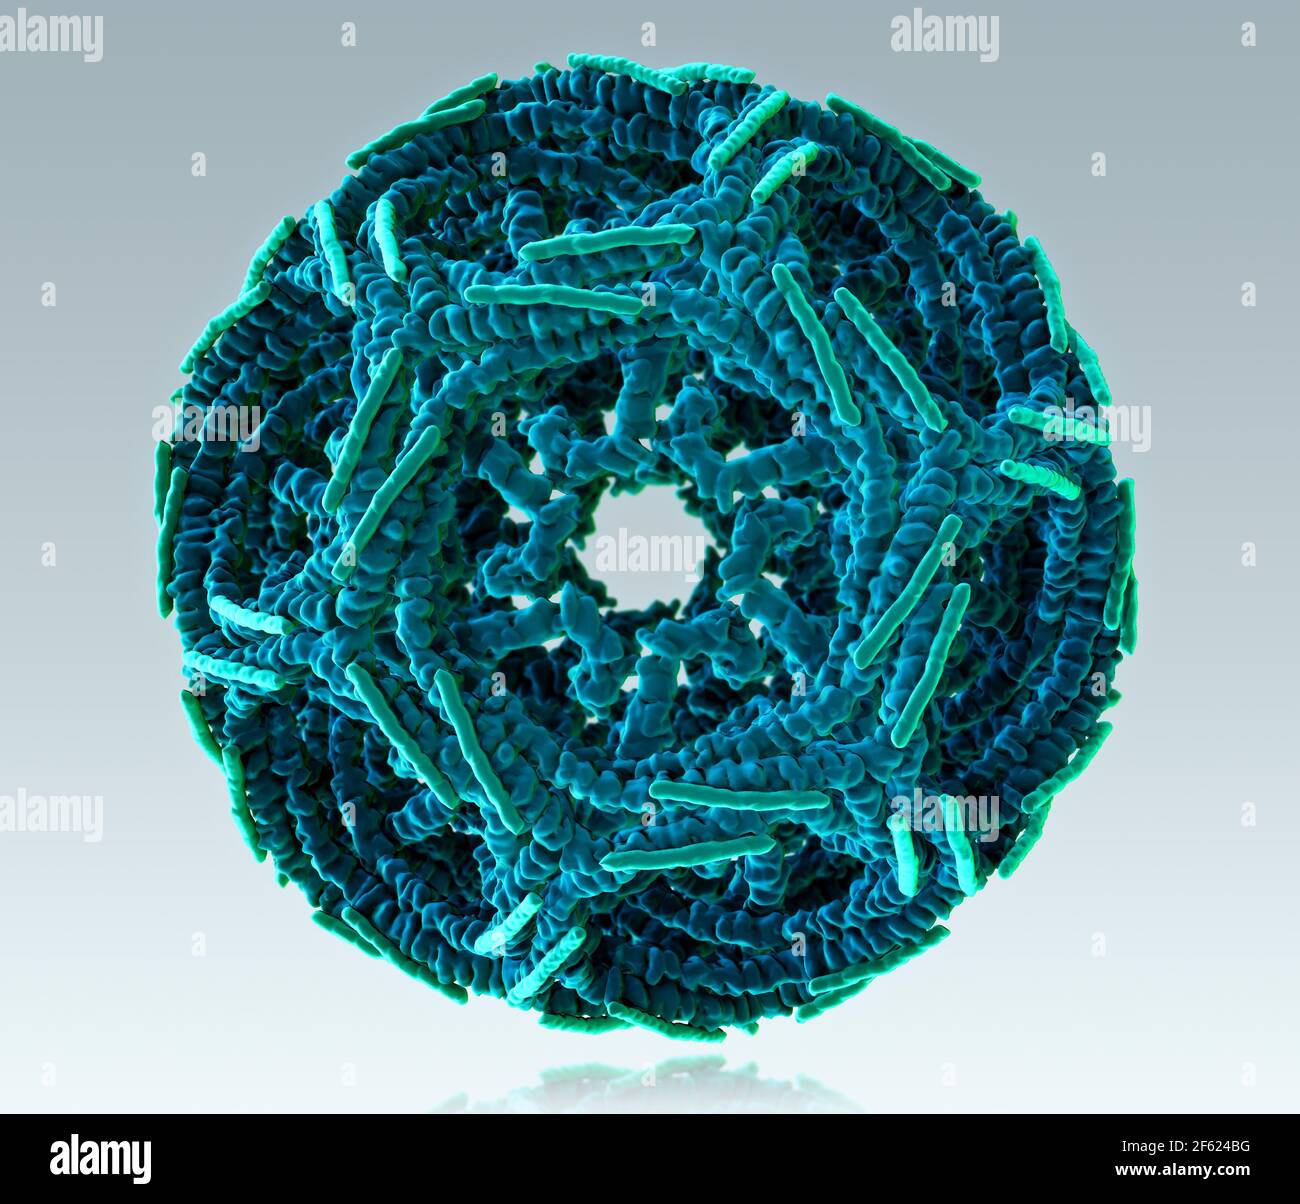 Clathrin Cage, Molecular Model Stock Photo